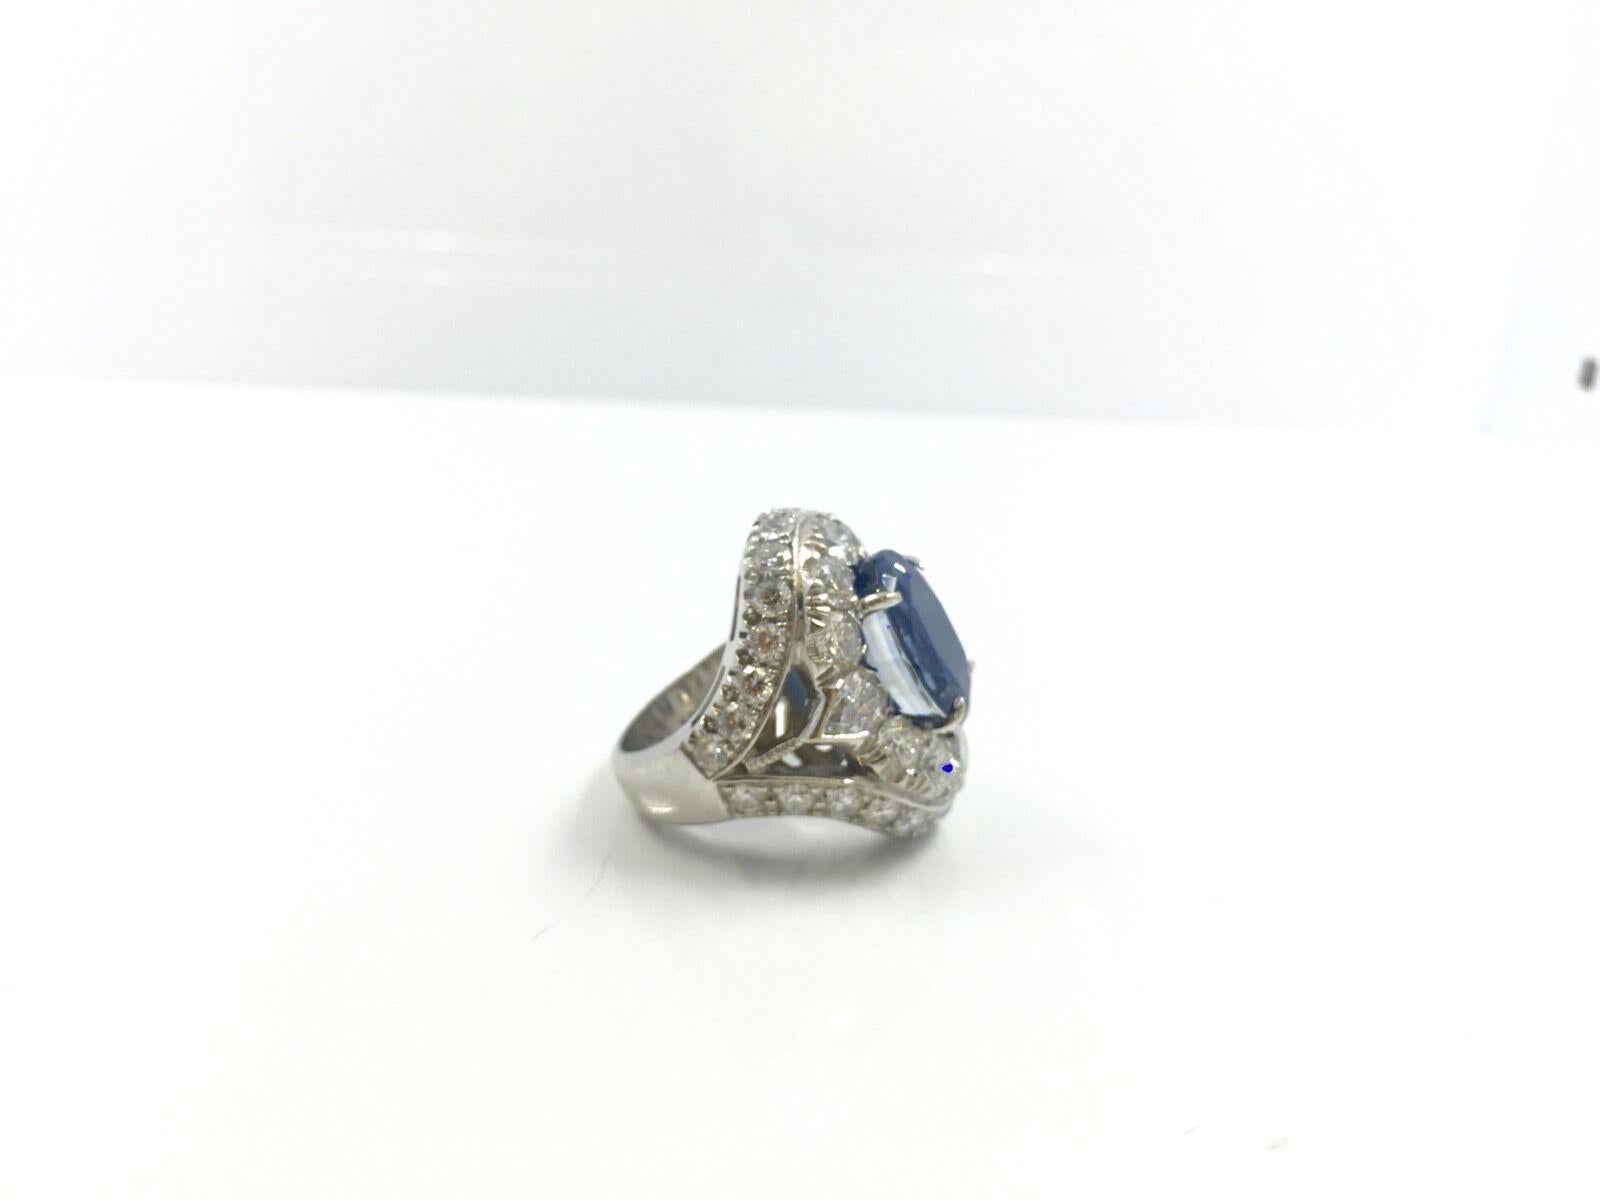 13.80 Carat Natural Unheated Ceylon Sapphire Diamond Ring In Good Condition For Sale In Miami, FL